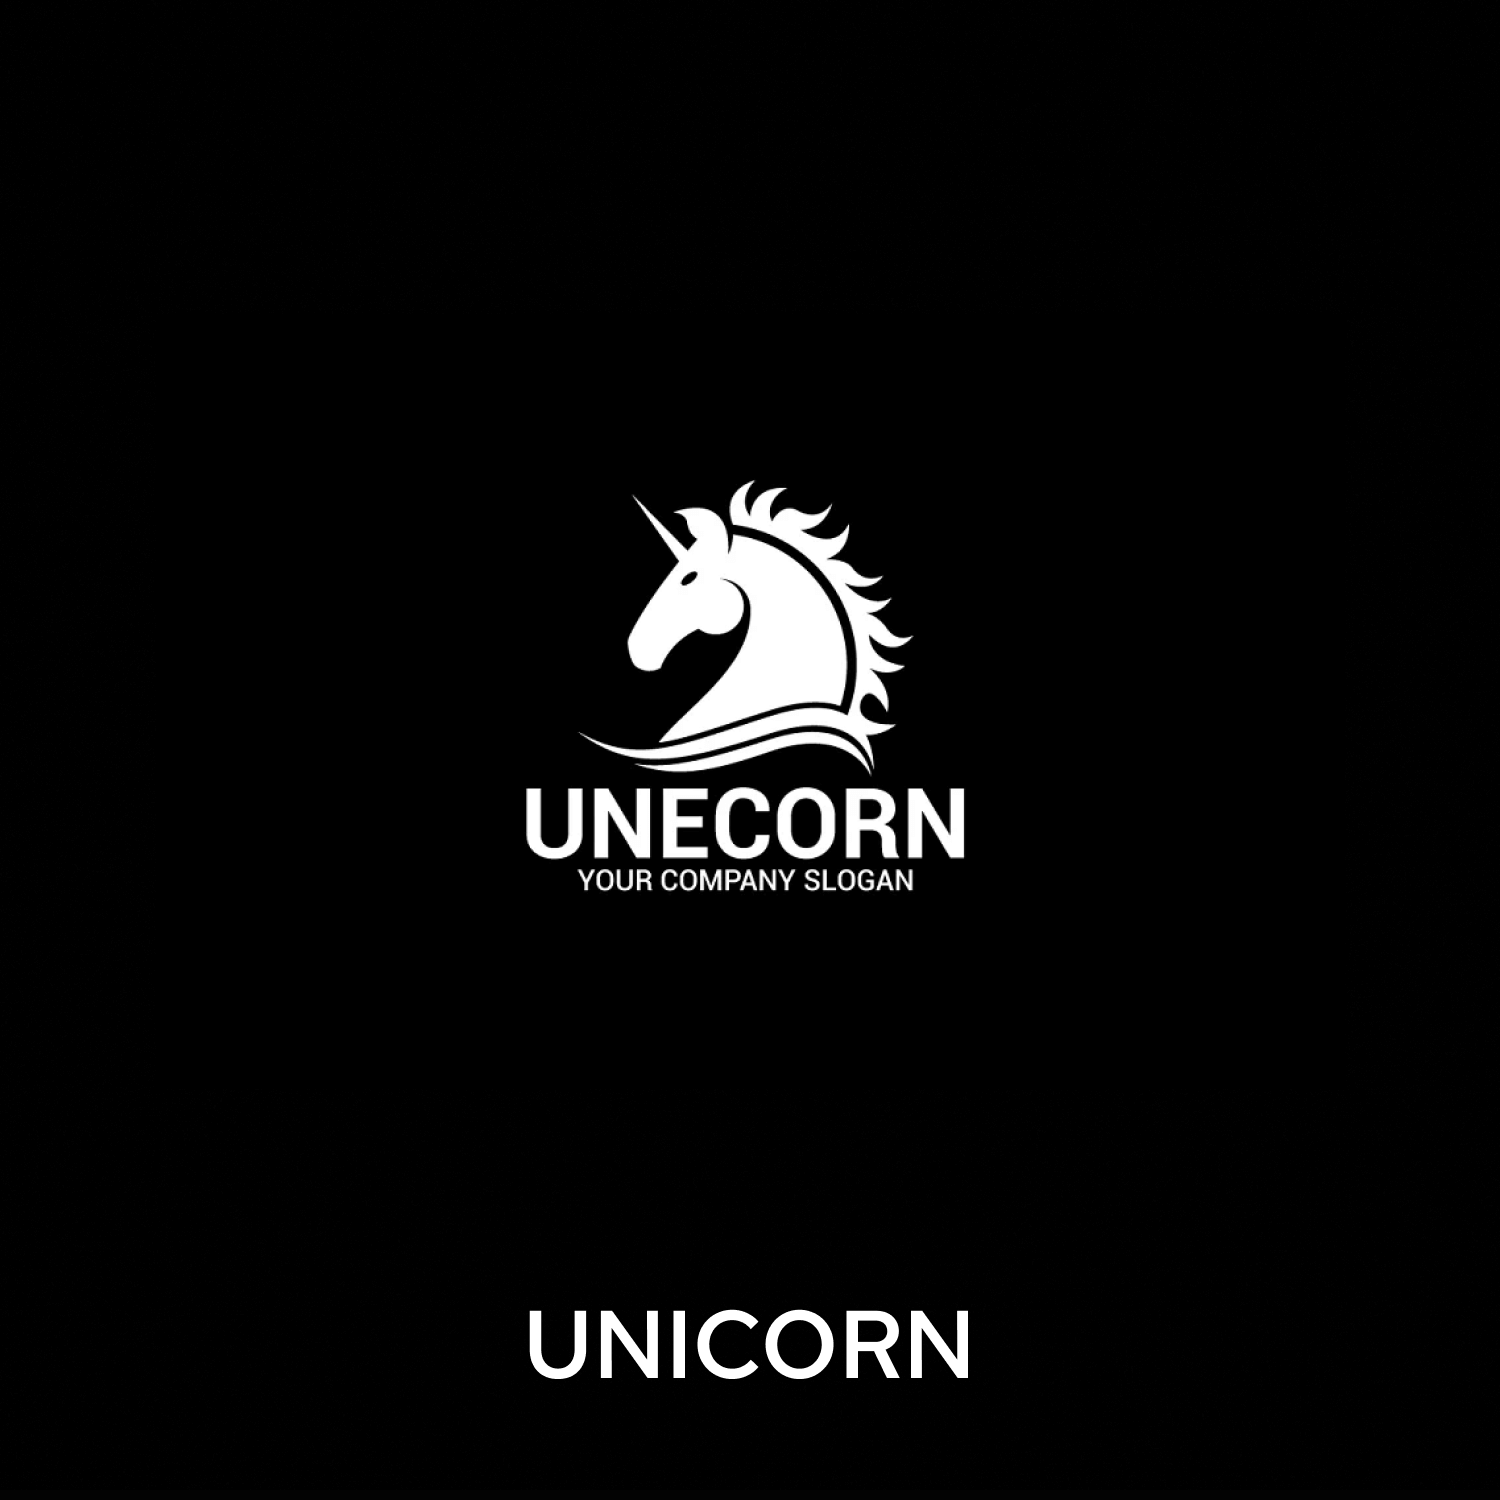 Unecorn mono color logo company name.